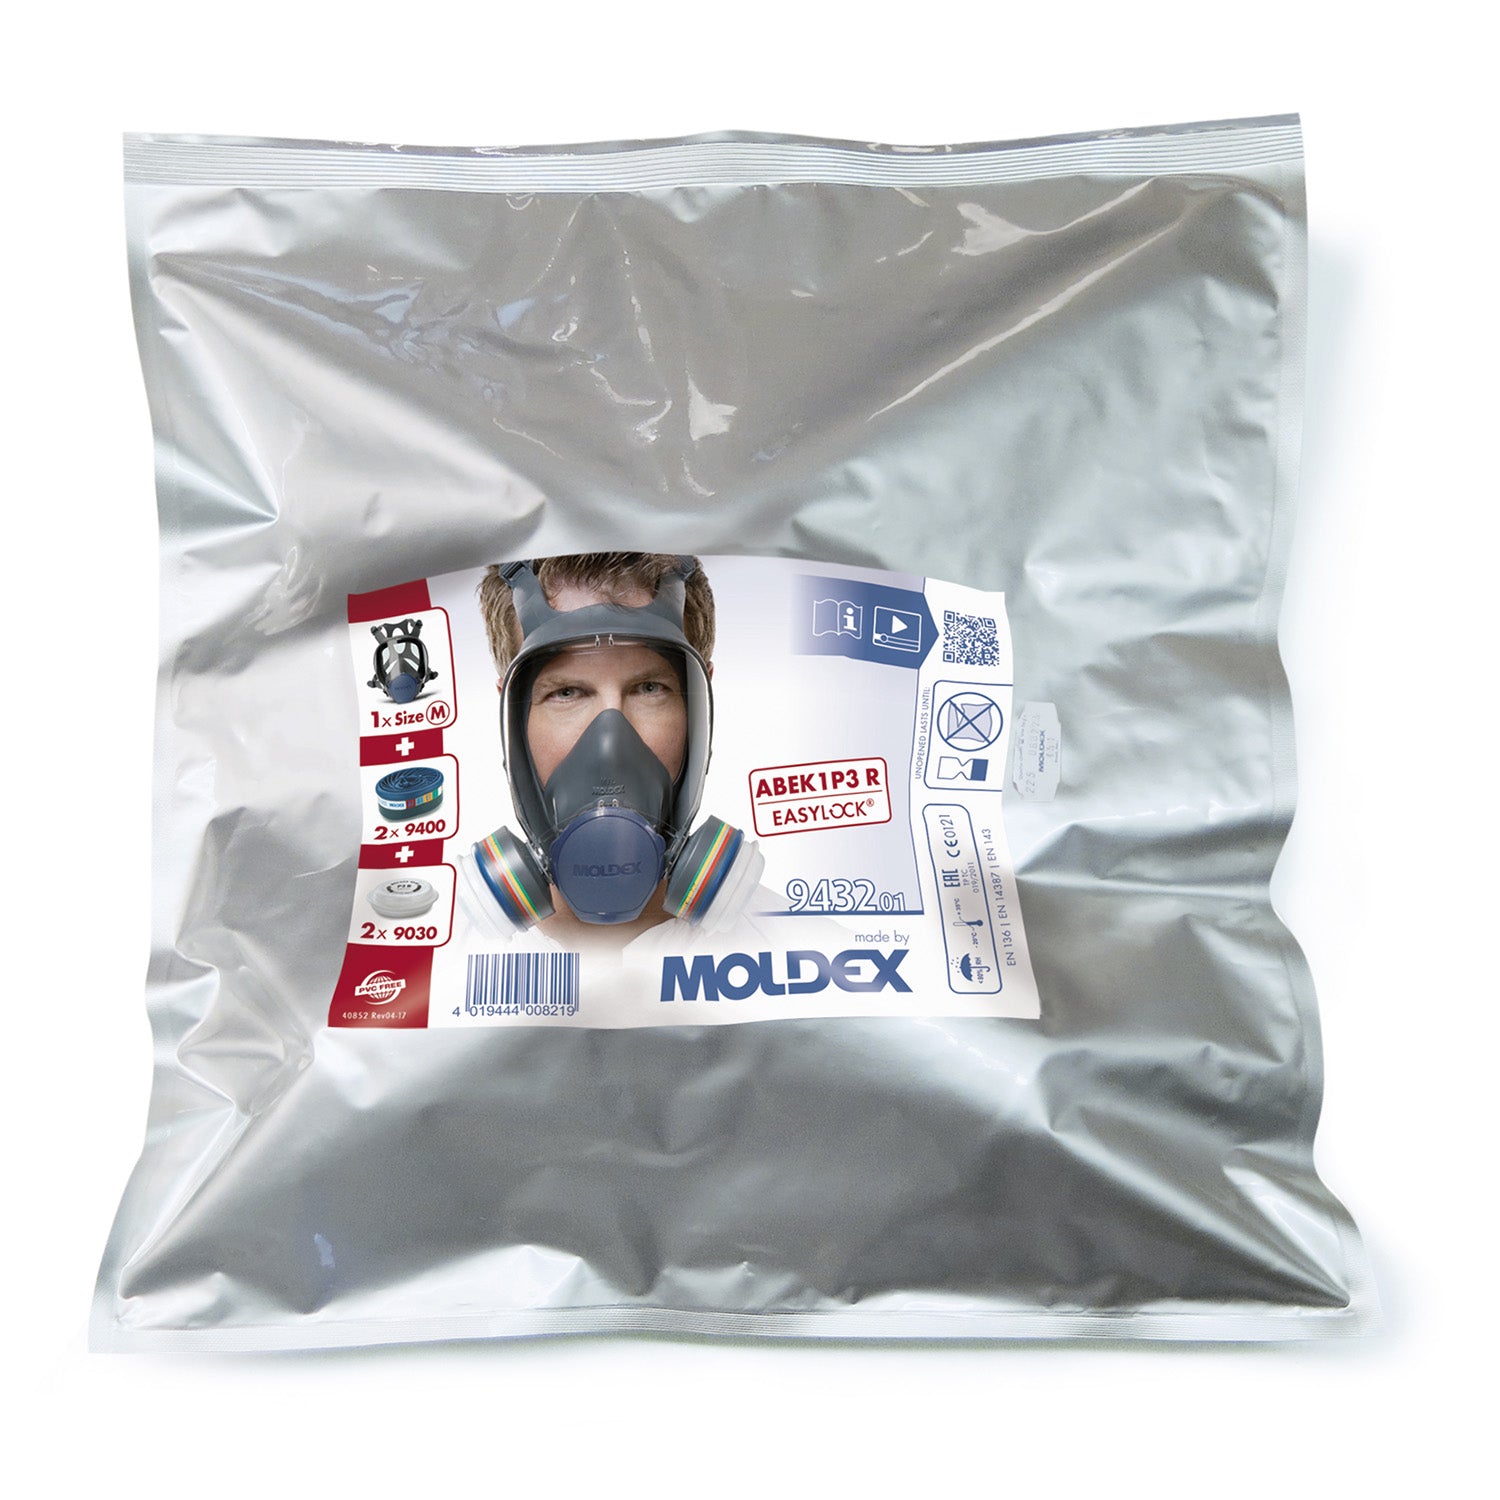 Moldex 9432 - ABEK1 P3 R Full Face Size M Series 9000 Mask